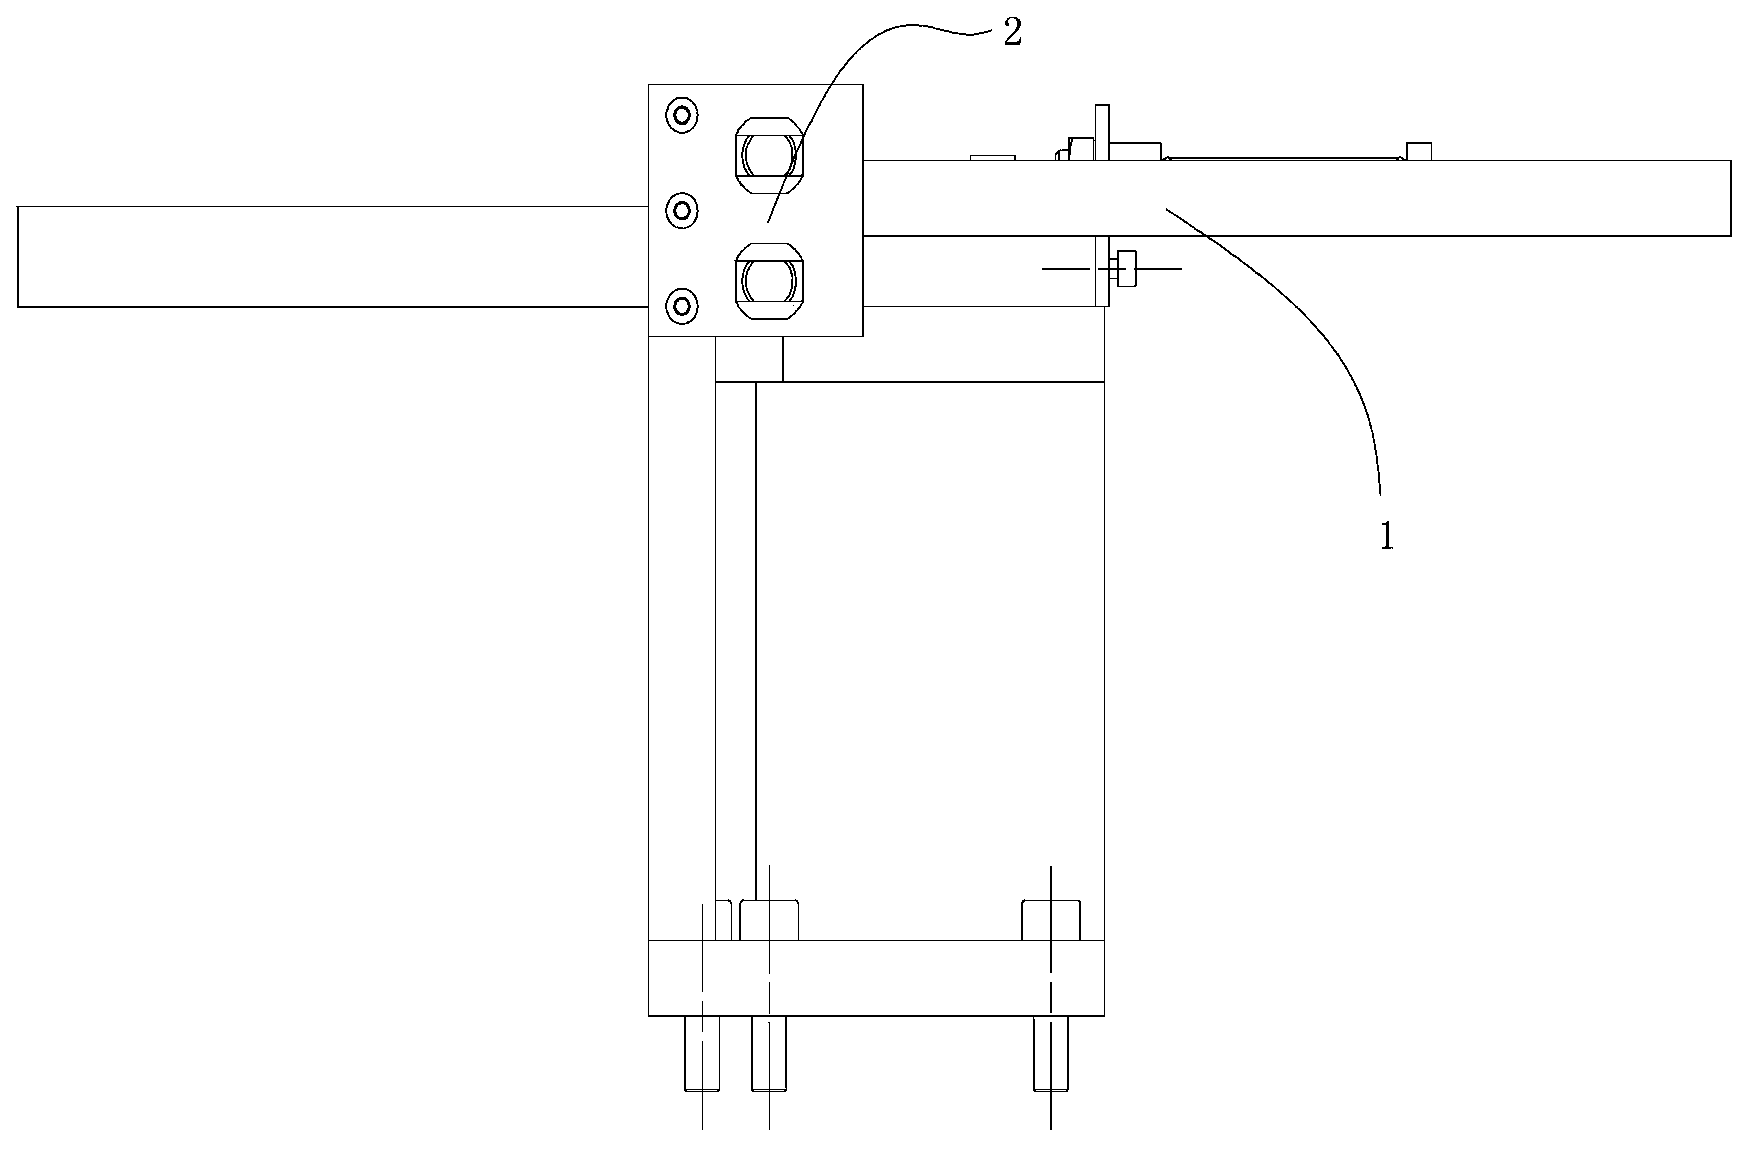 Symmetrical component automatic assembling mechanism